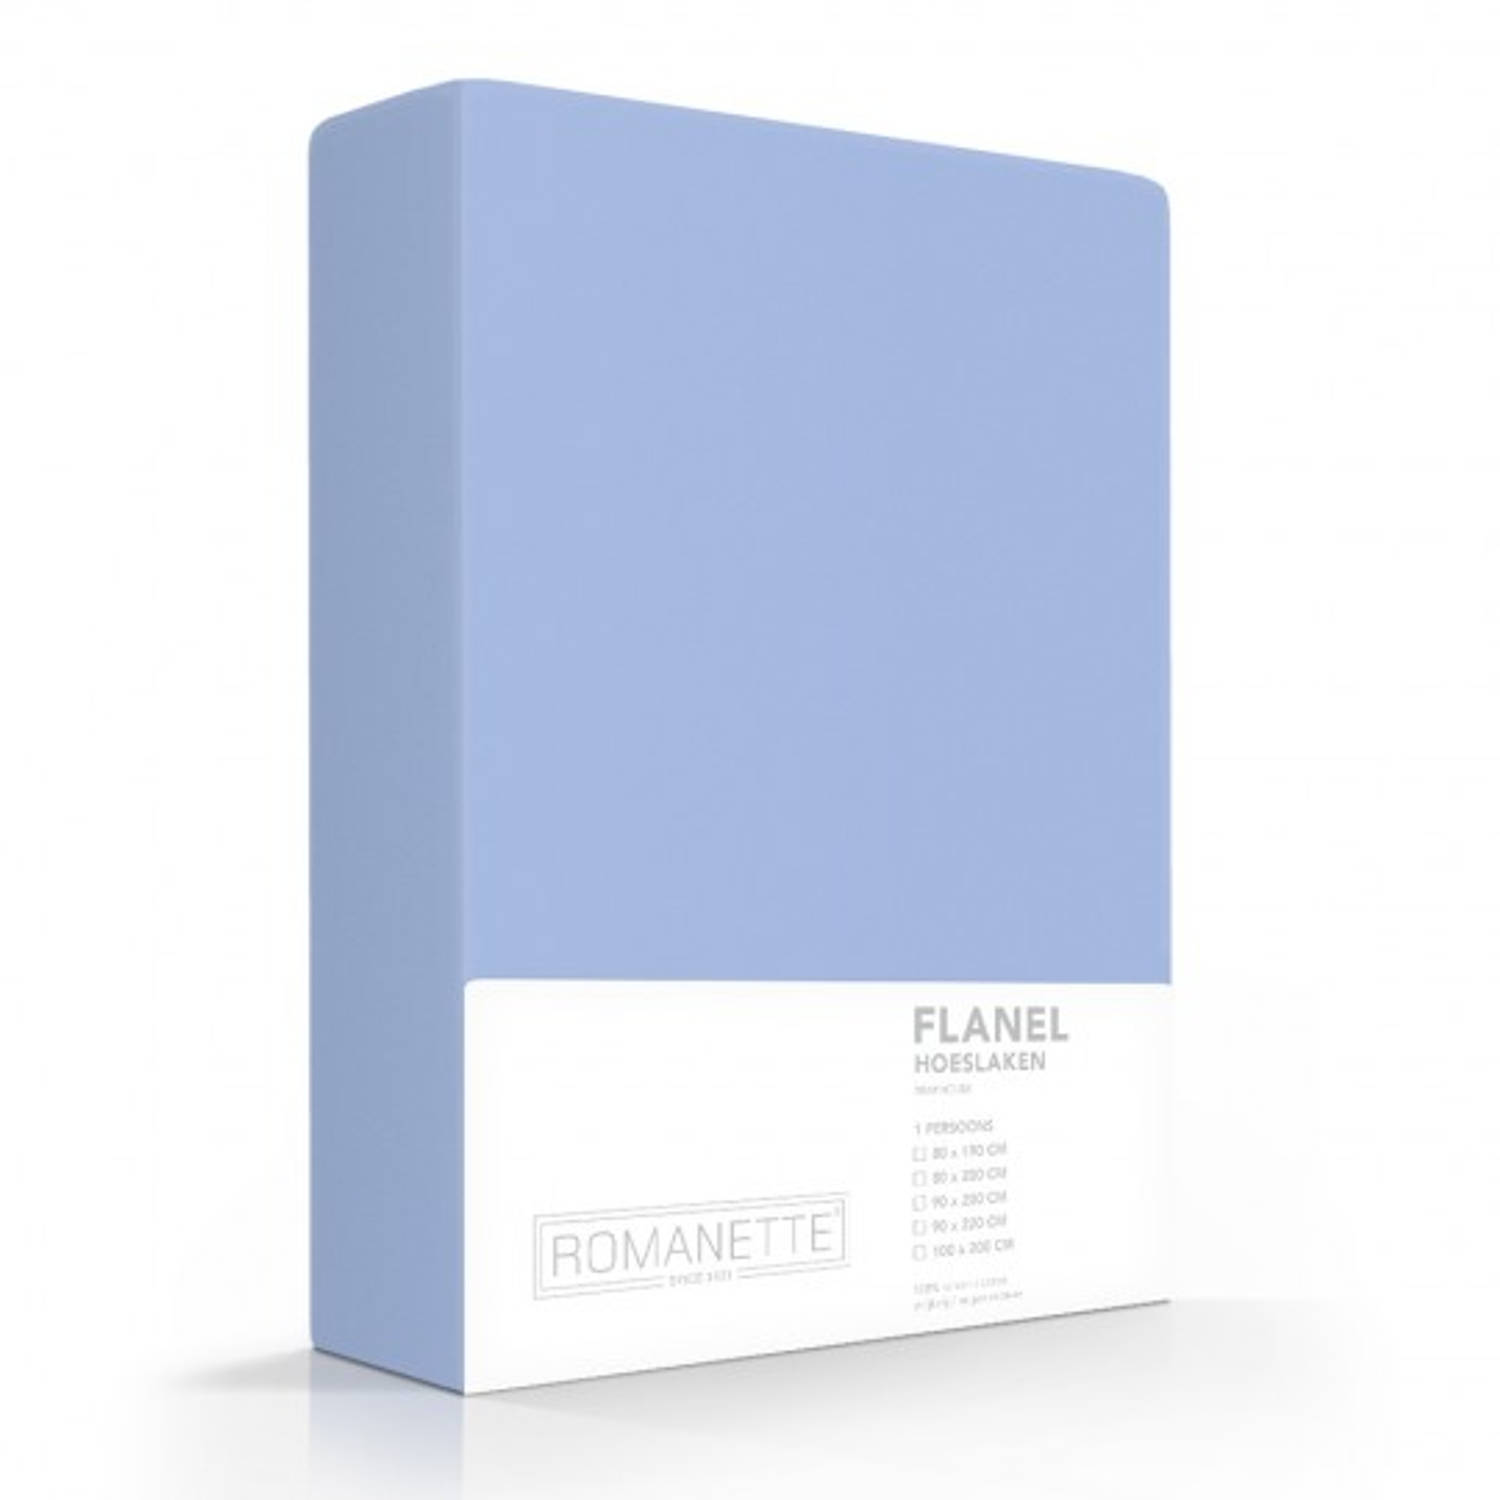 Romanette Flanellen Hoeslaken -180 X 200 Cm - Blauw